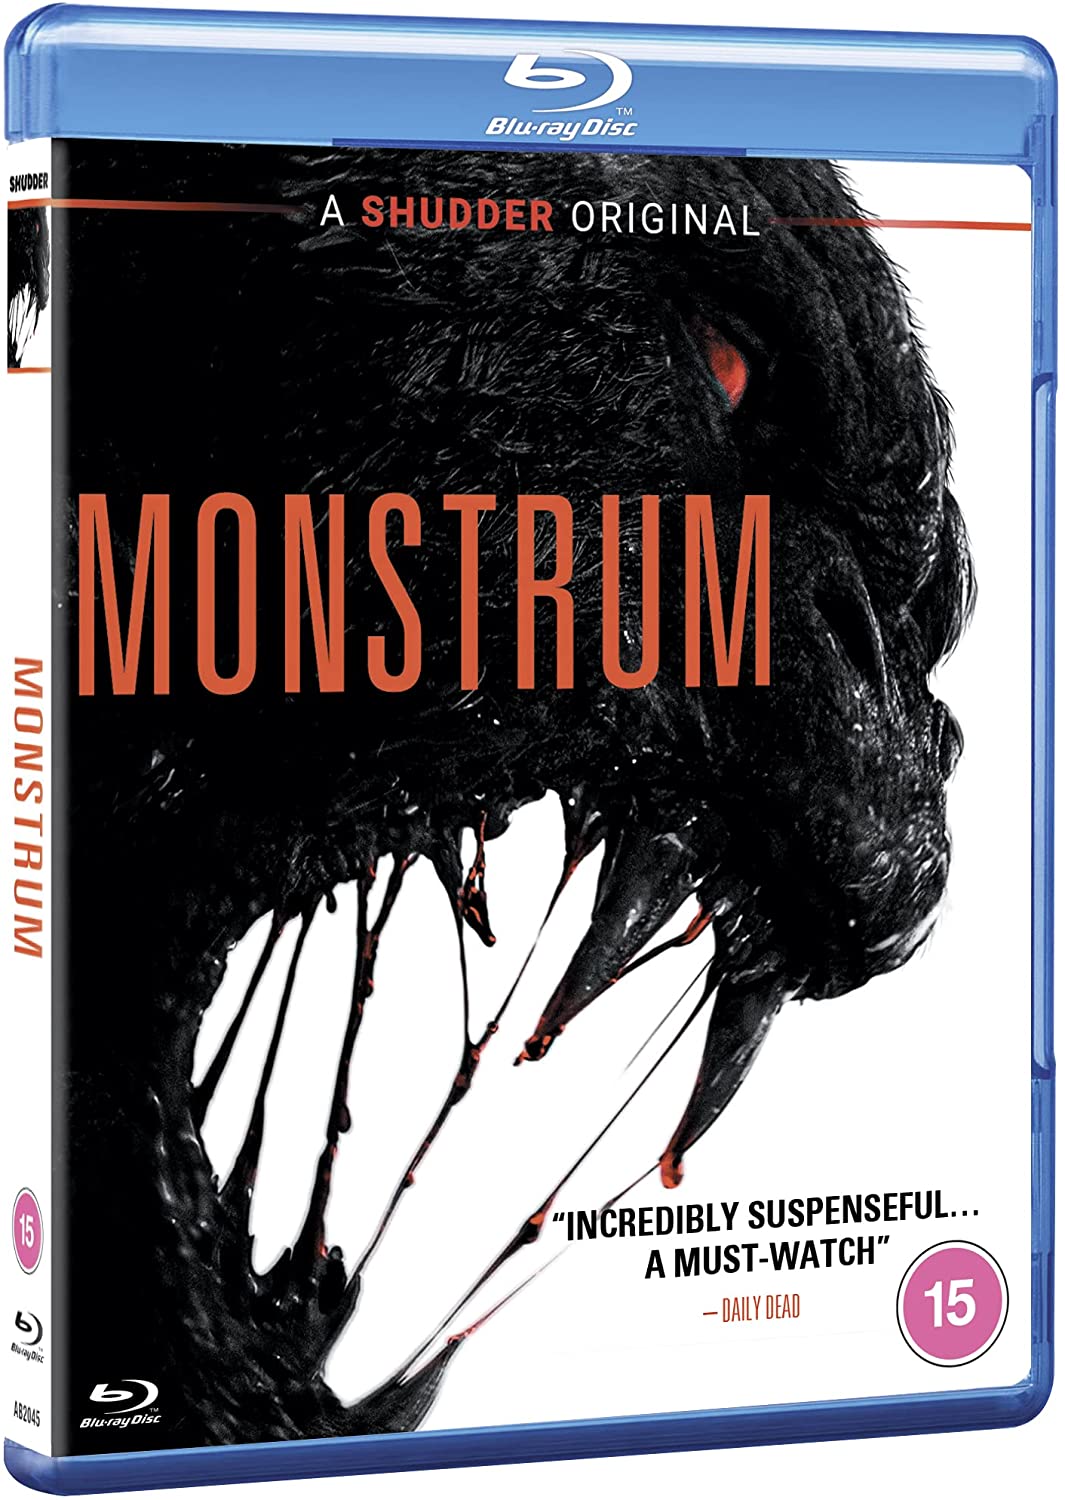 Monstrum (SHUDDER) [2018] – Action/Fantasy [Blu-ray]